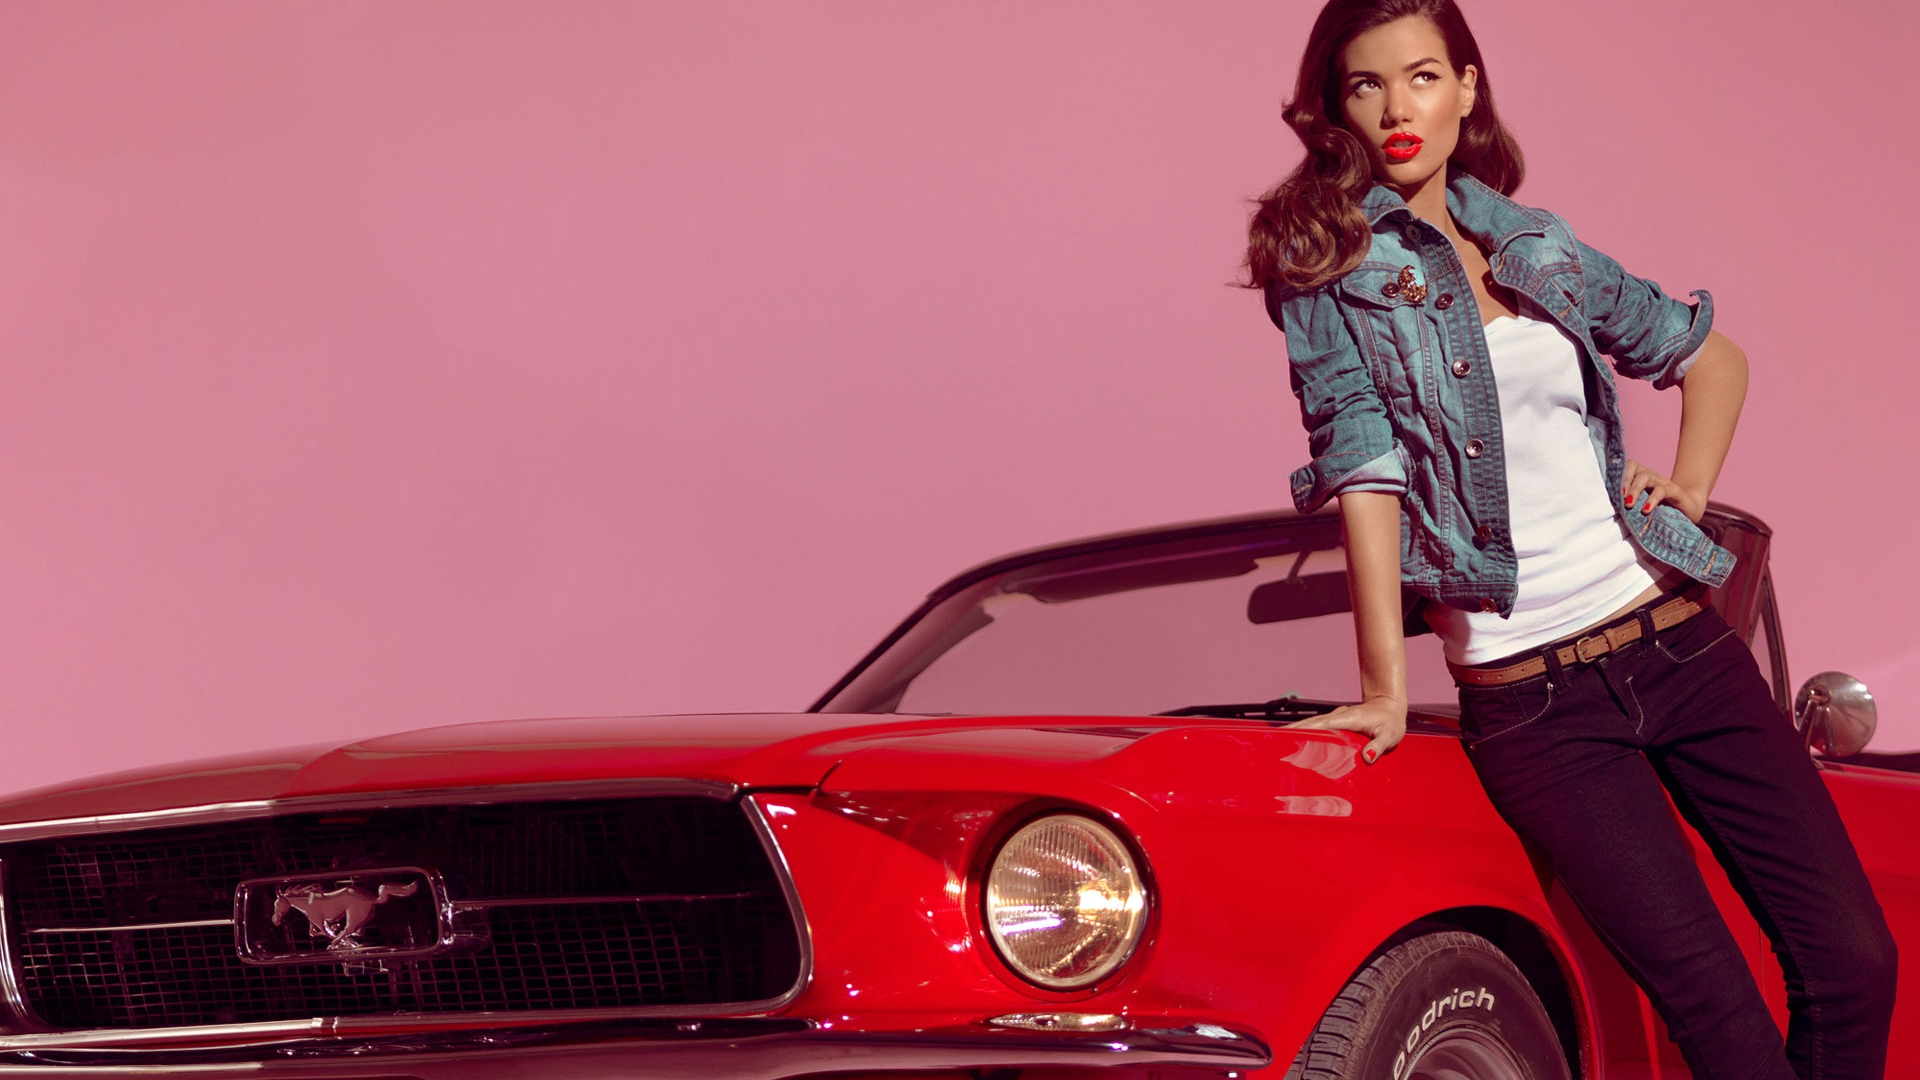 Girls & Cars HD Wallpaper